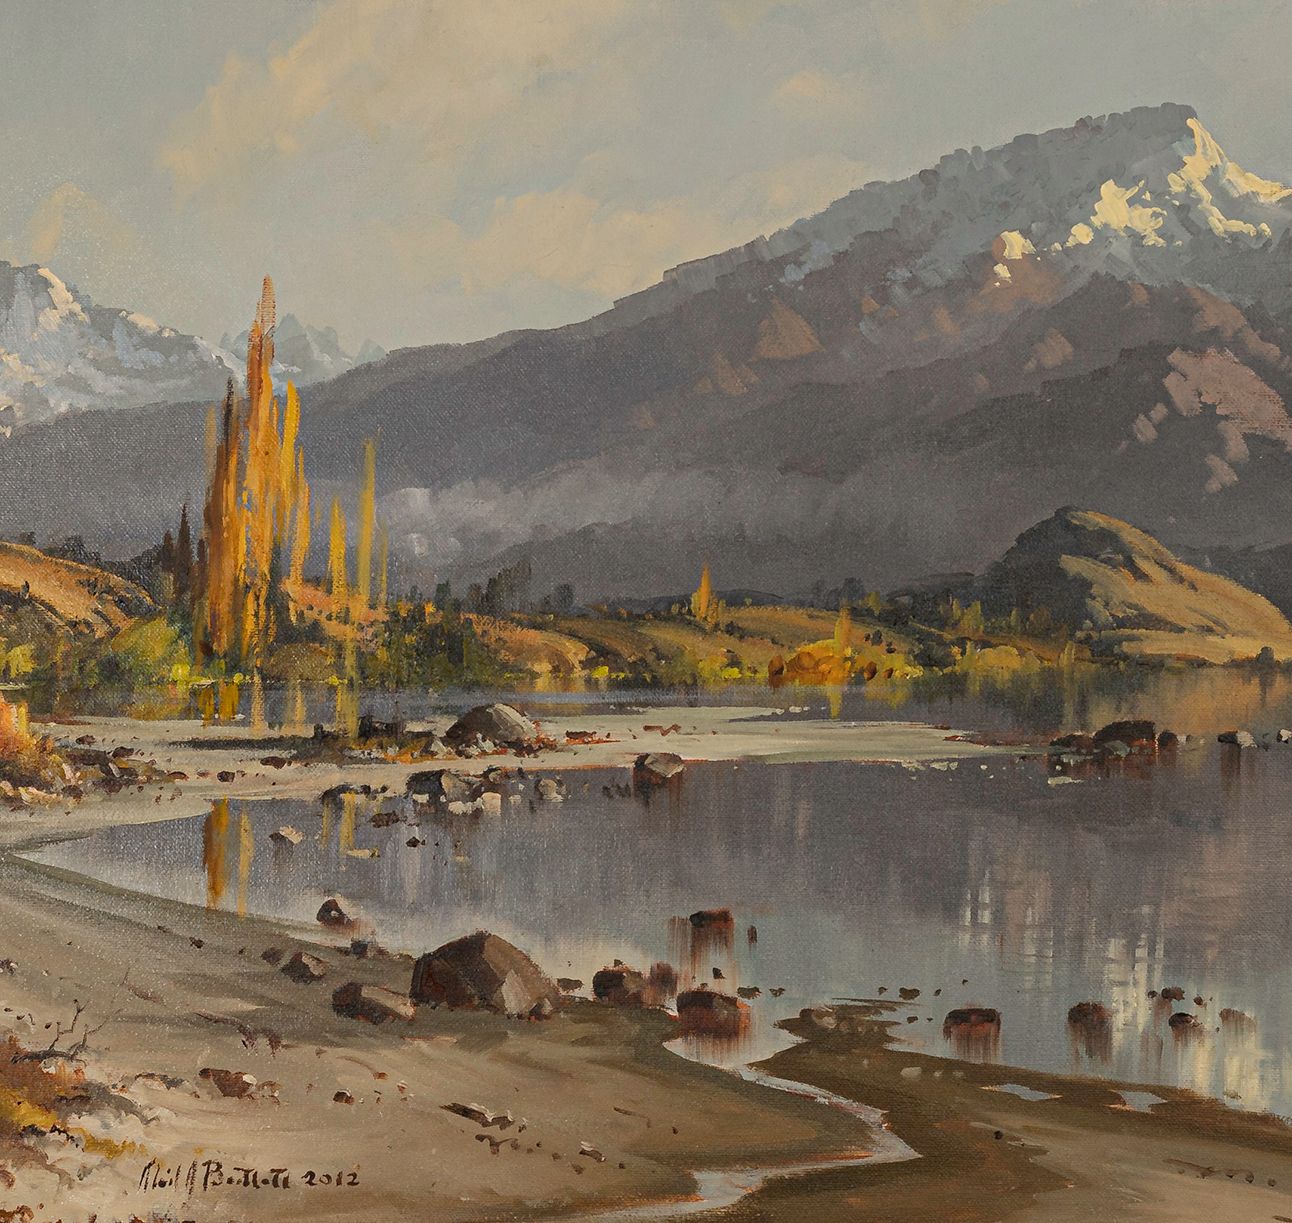 Partial detail of Framed Oil Painting by Neil J Bartlett Wanaka NZ Silver Fern Gallery